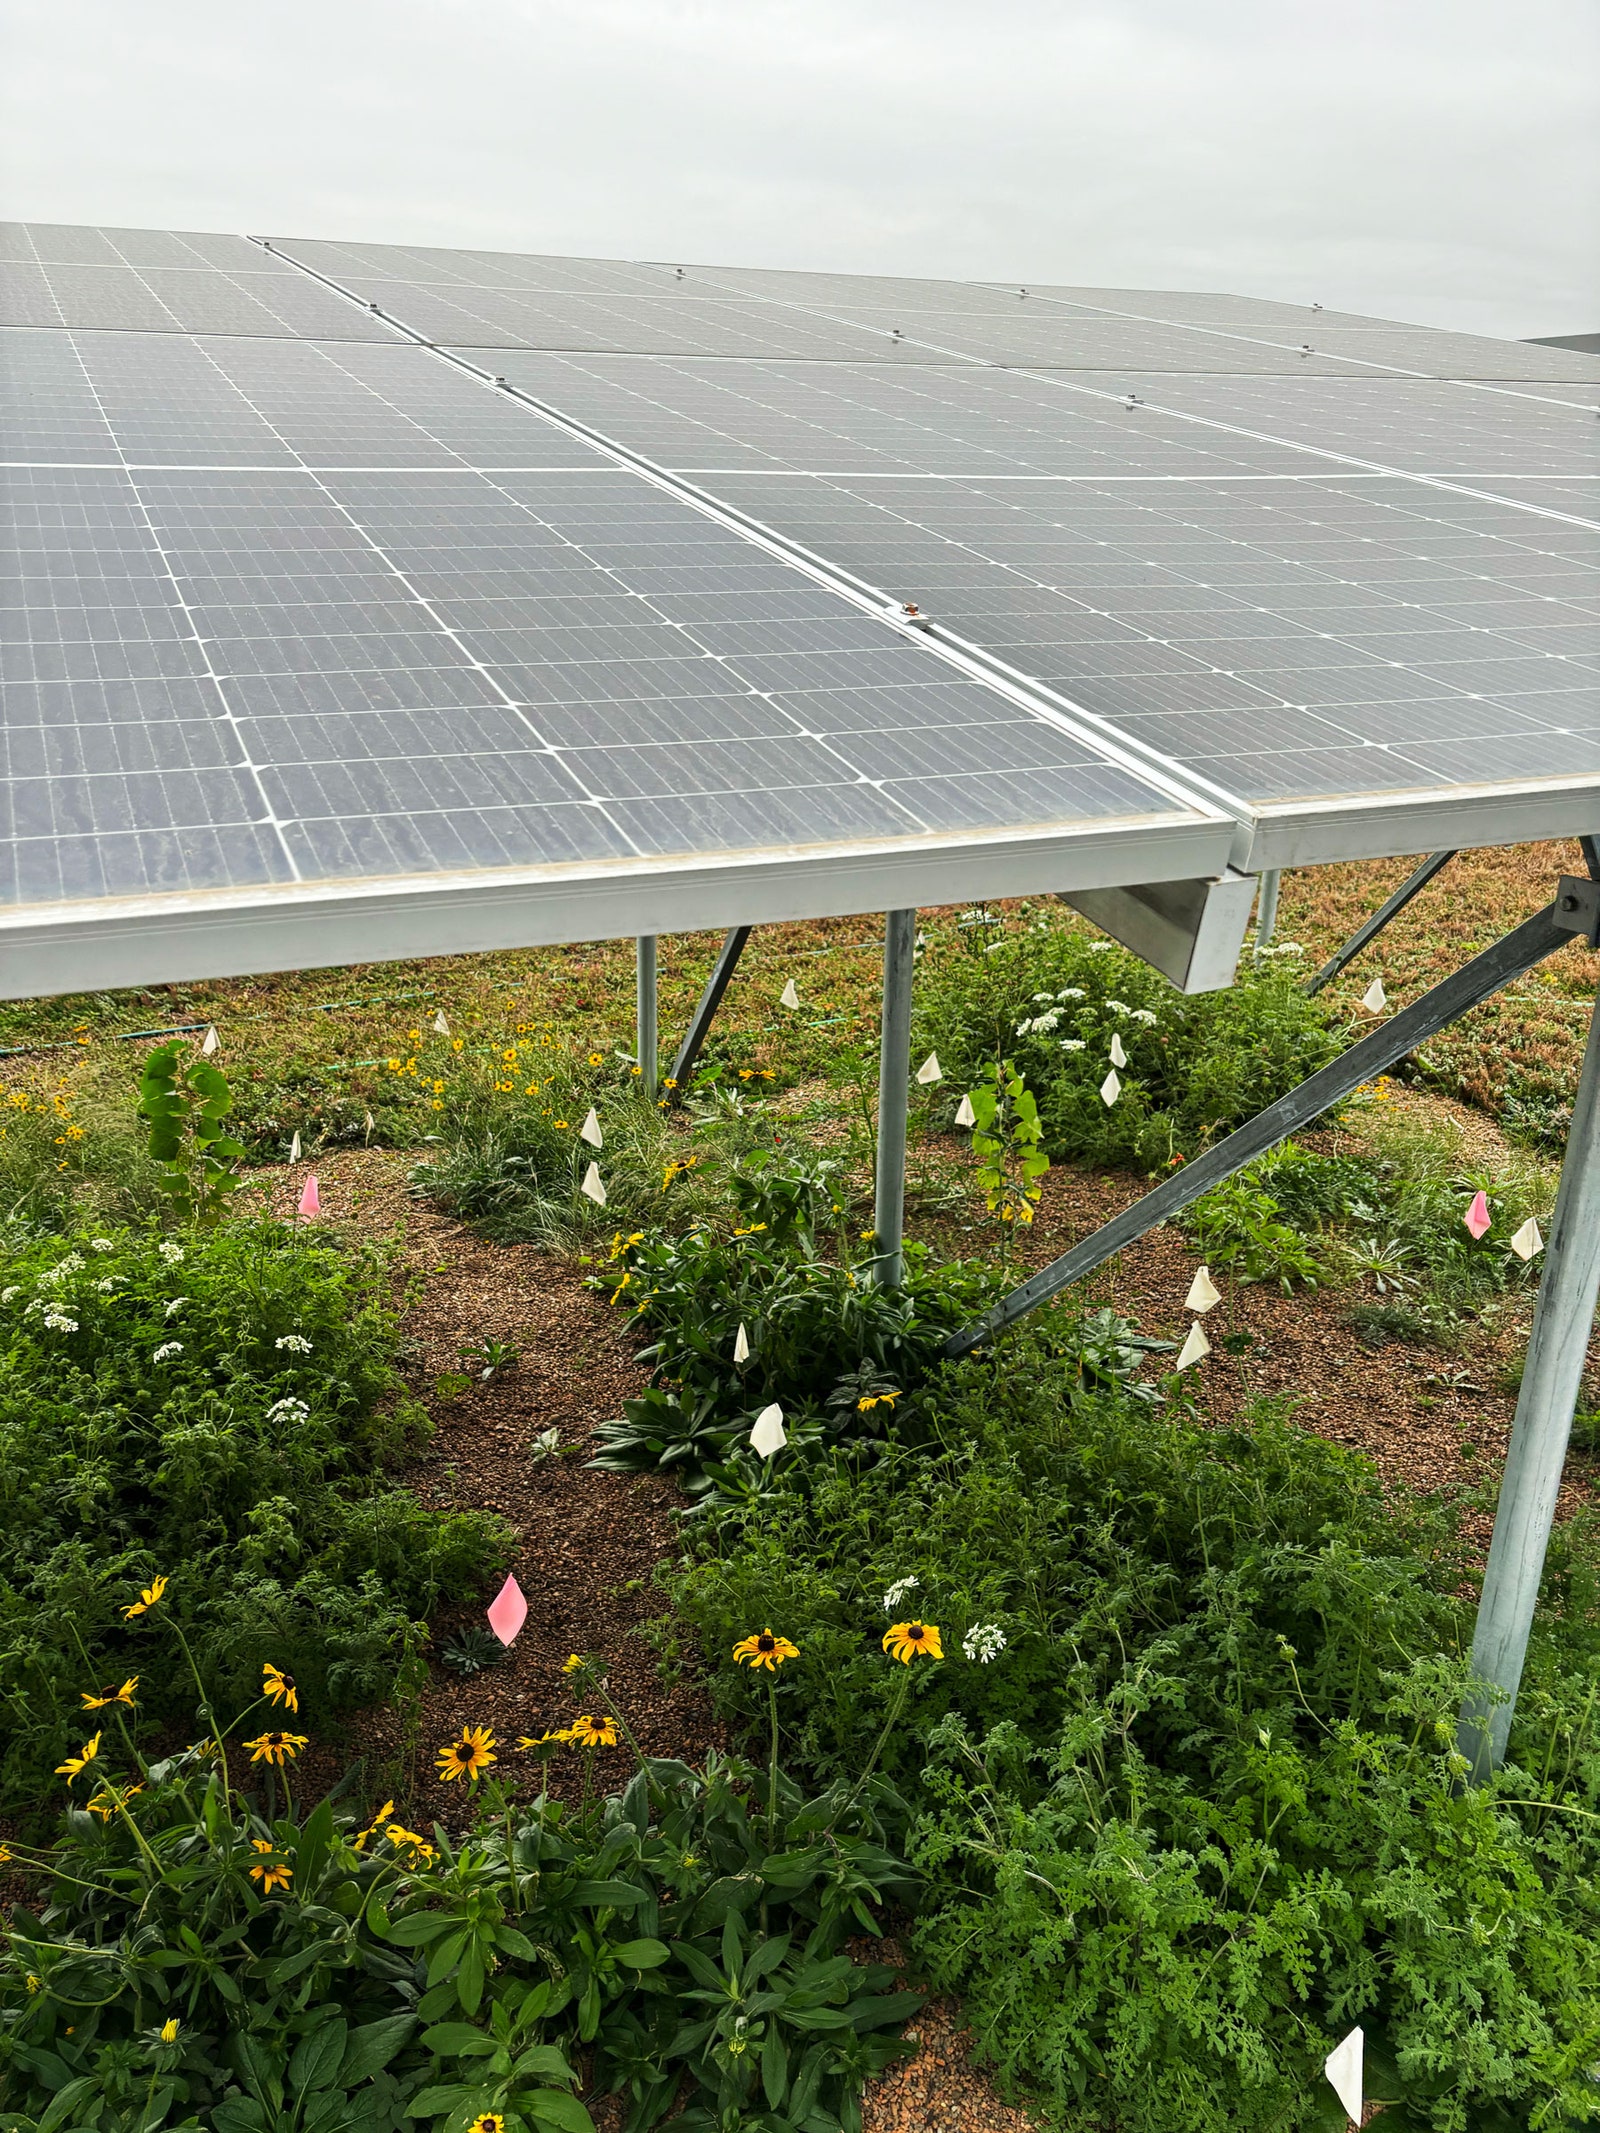 solar panel above crops